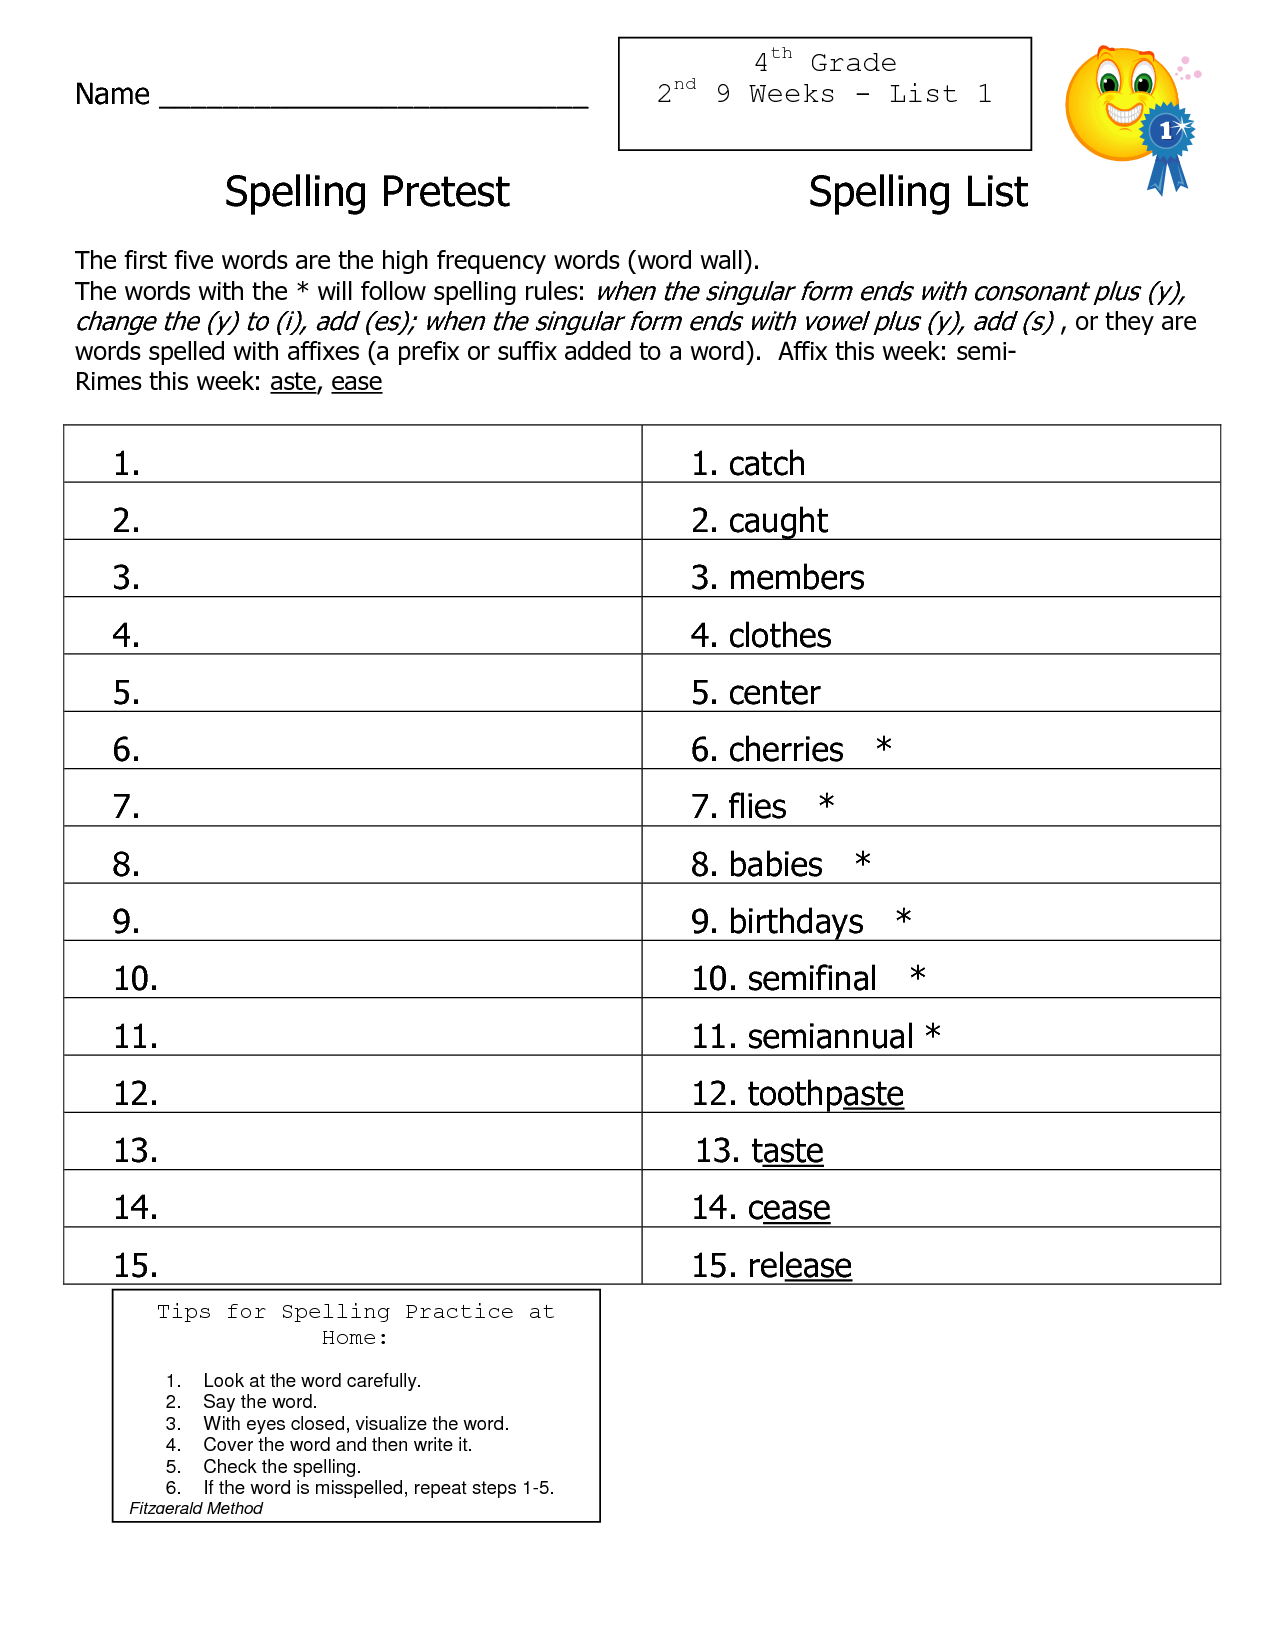 4th Grade Spelling Words Worksheets Image